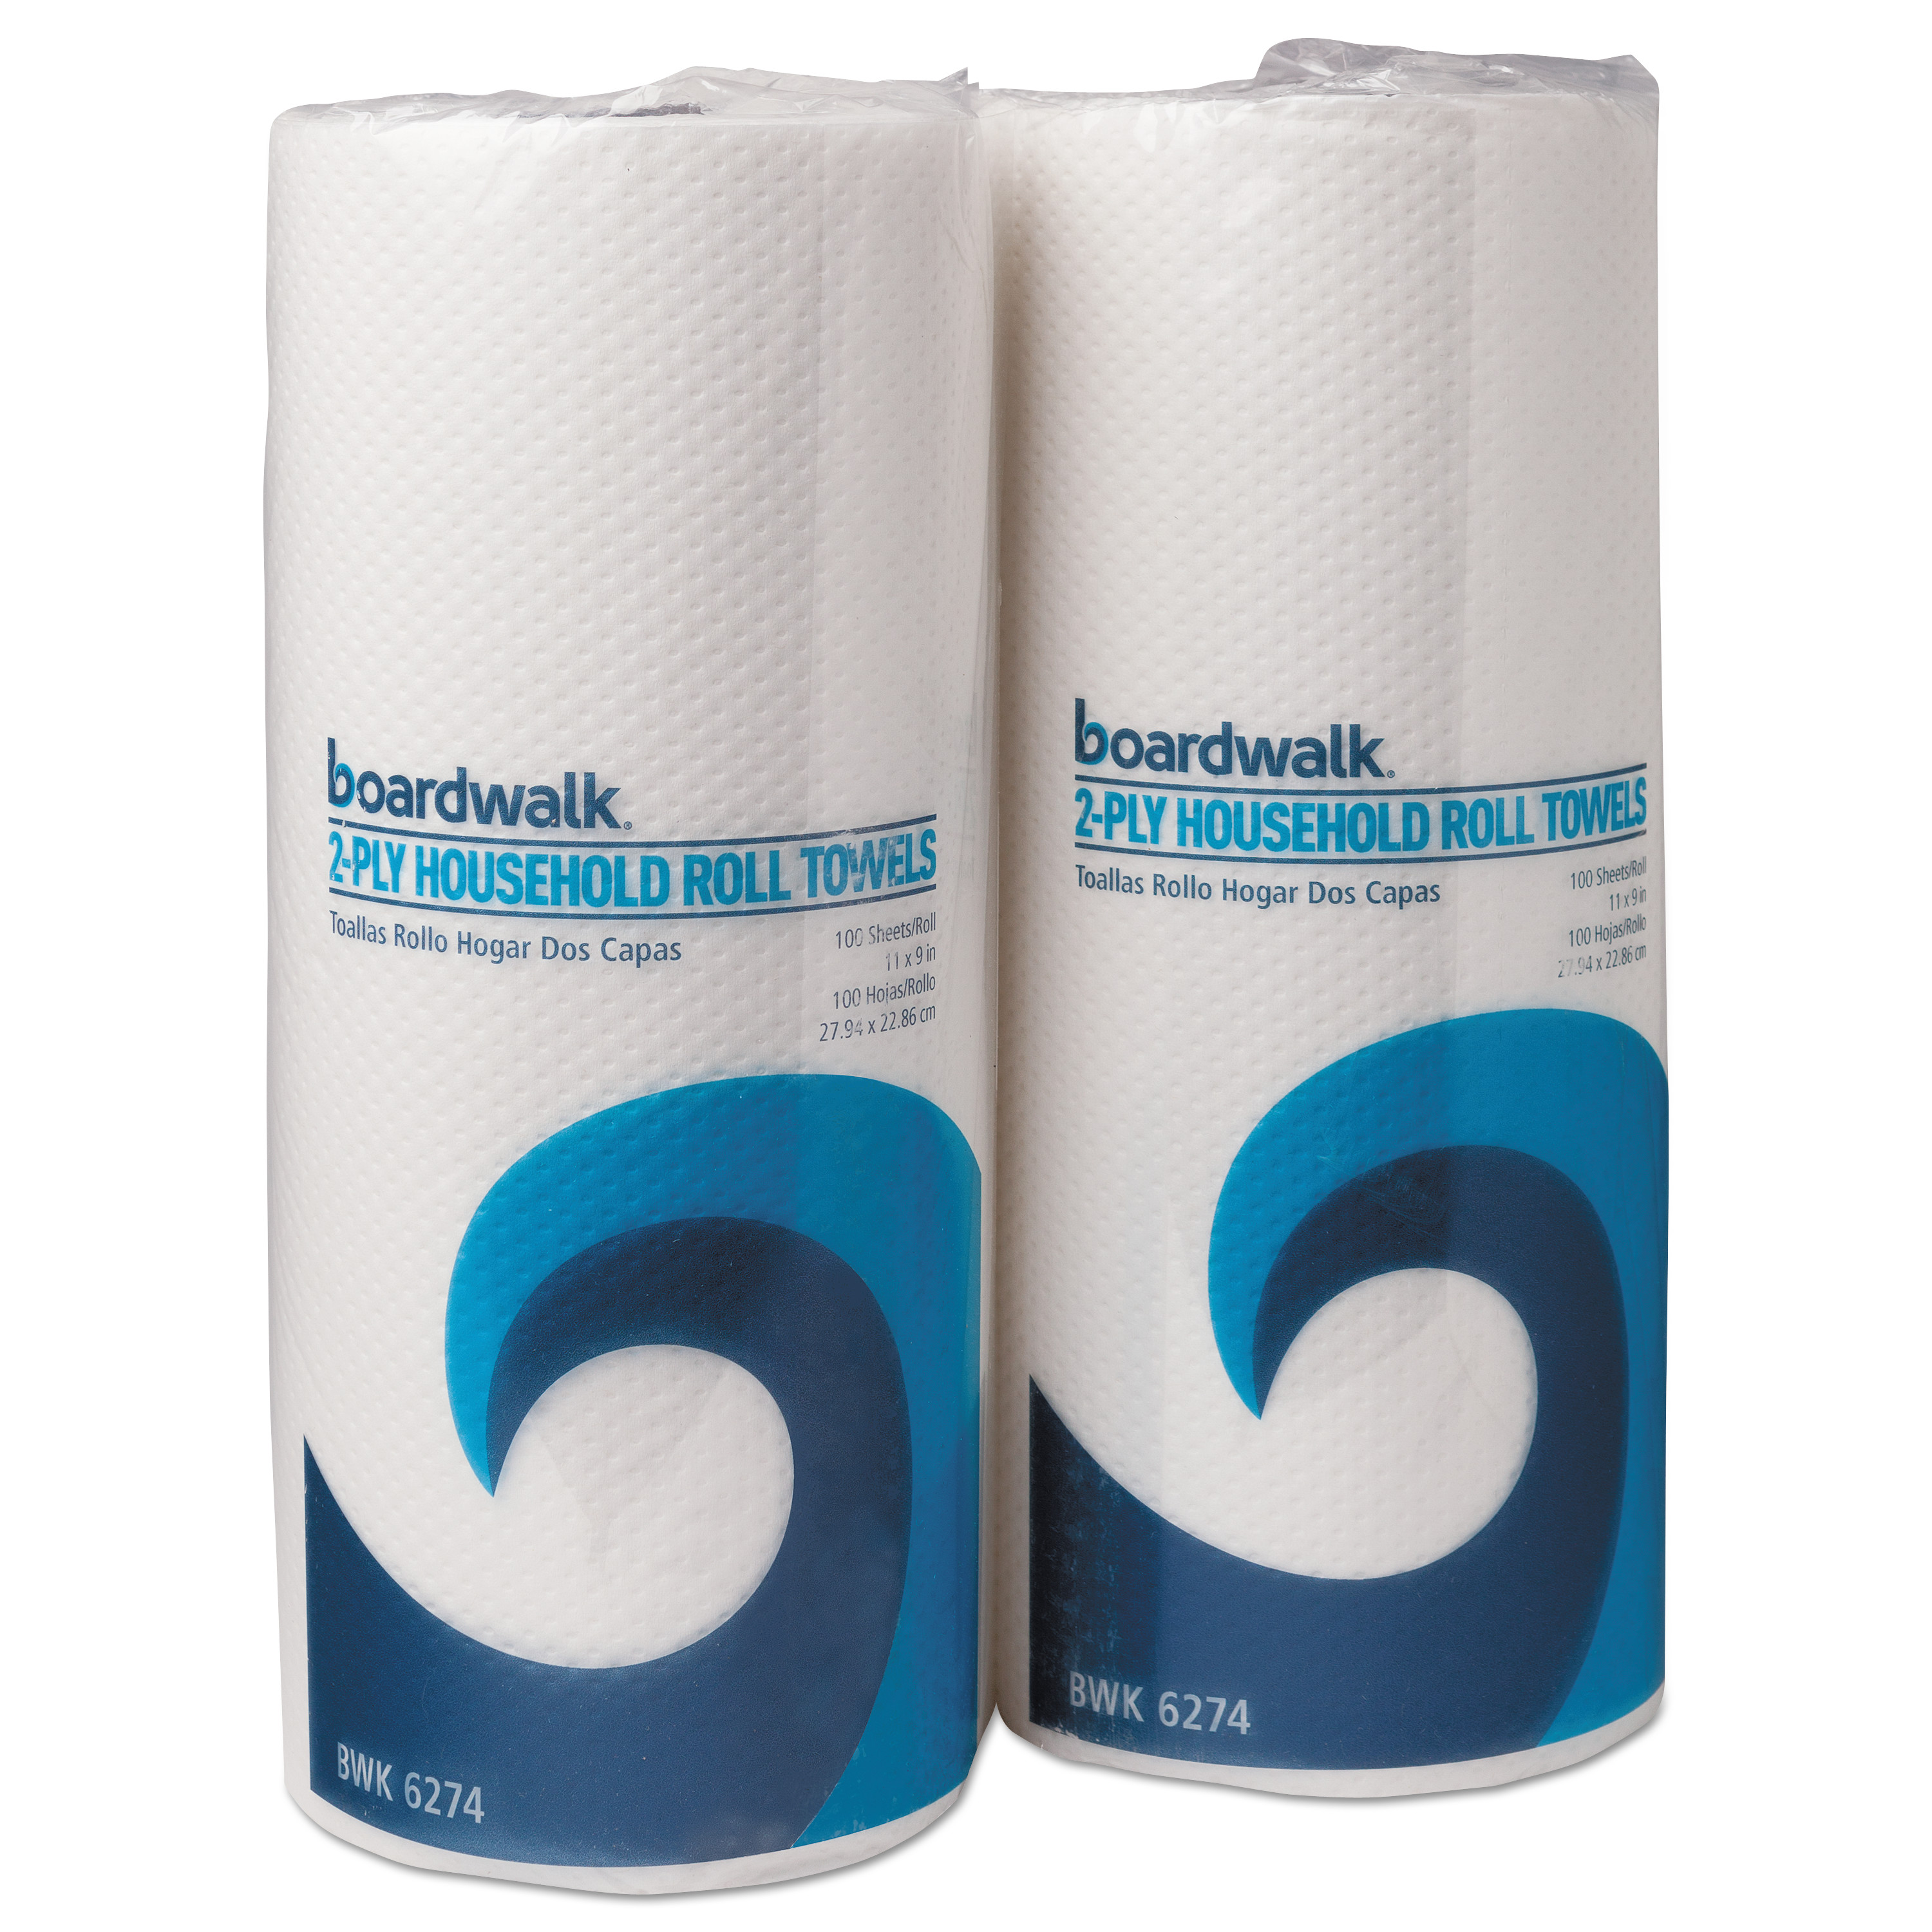 Boardwalk Green Household Roll Towels, 2-Ply, White, 9 x 11, 100/RL, 30 Rolls/CT